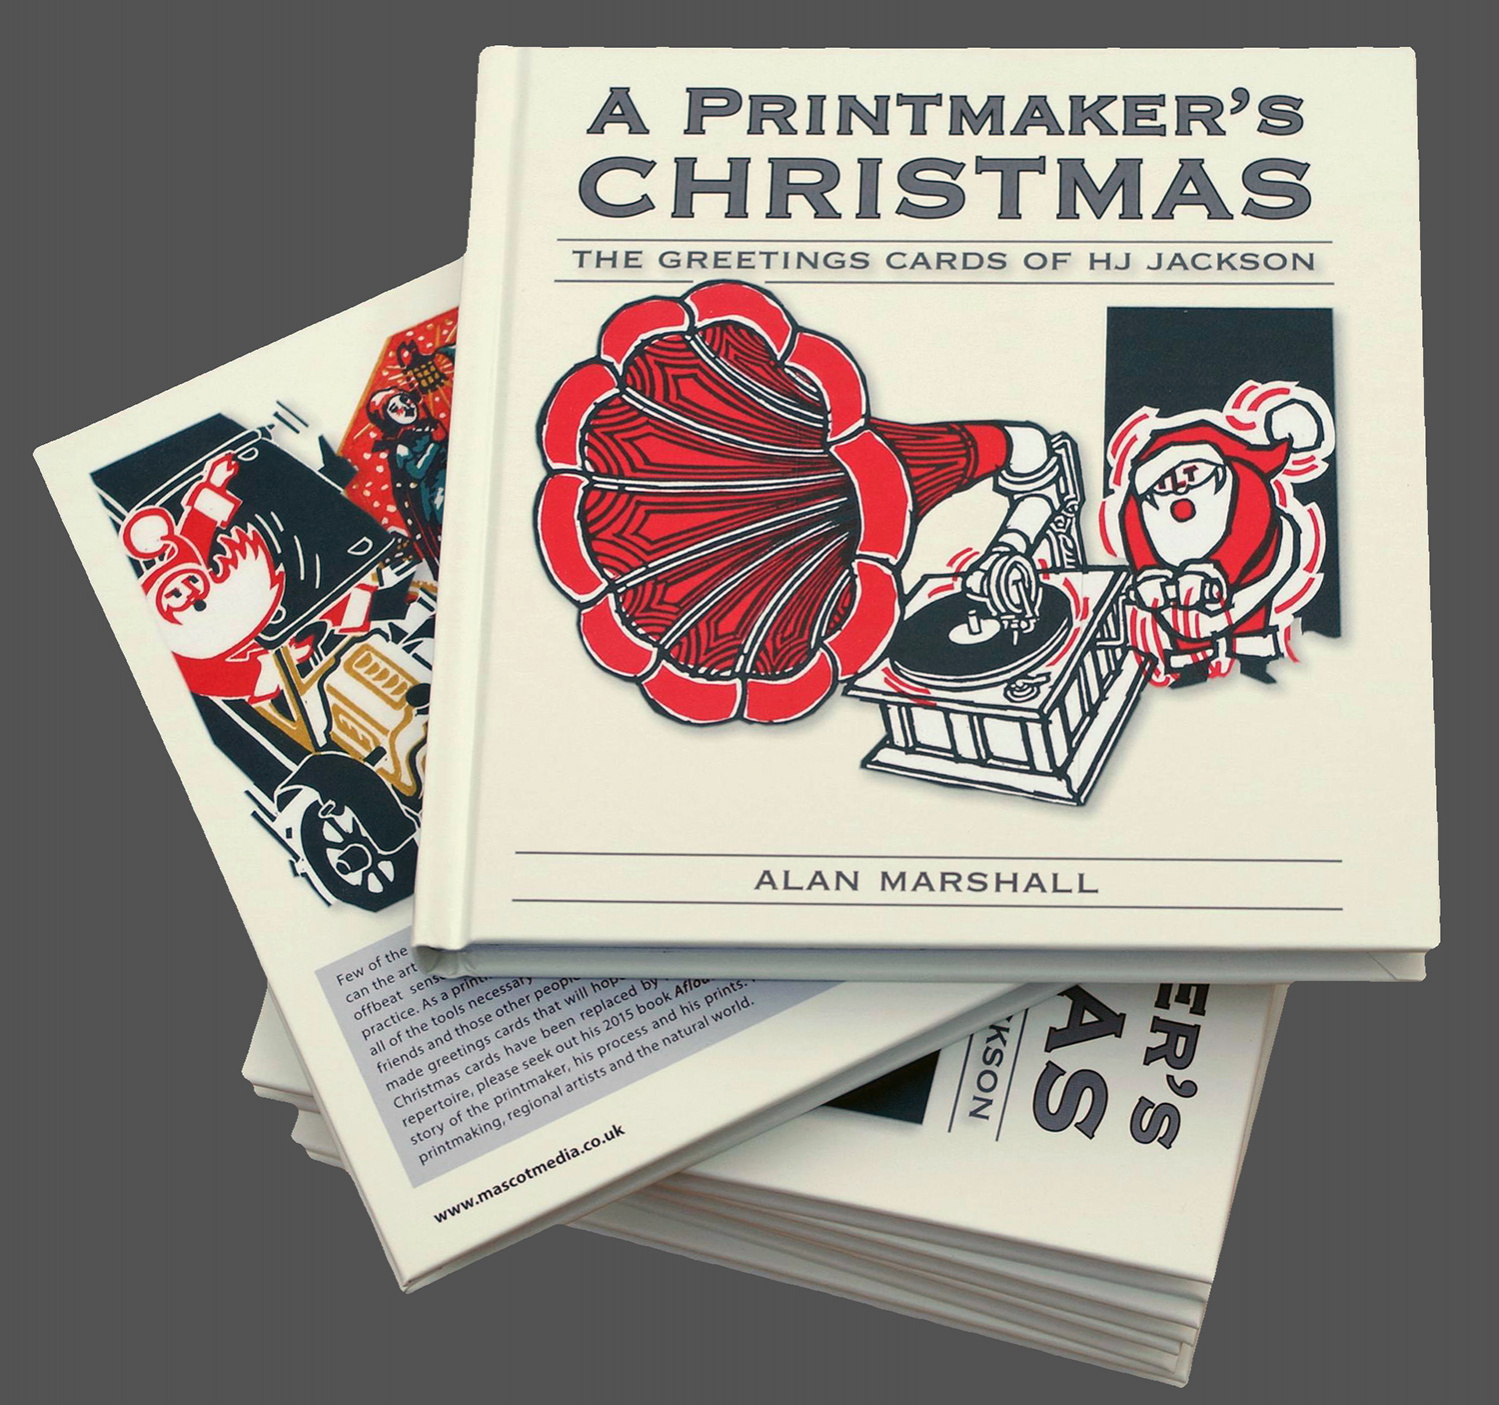 A Printmaker's Christmas - The Greetings Cards of HJ Jackson by H.J. Jackson